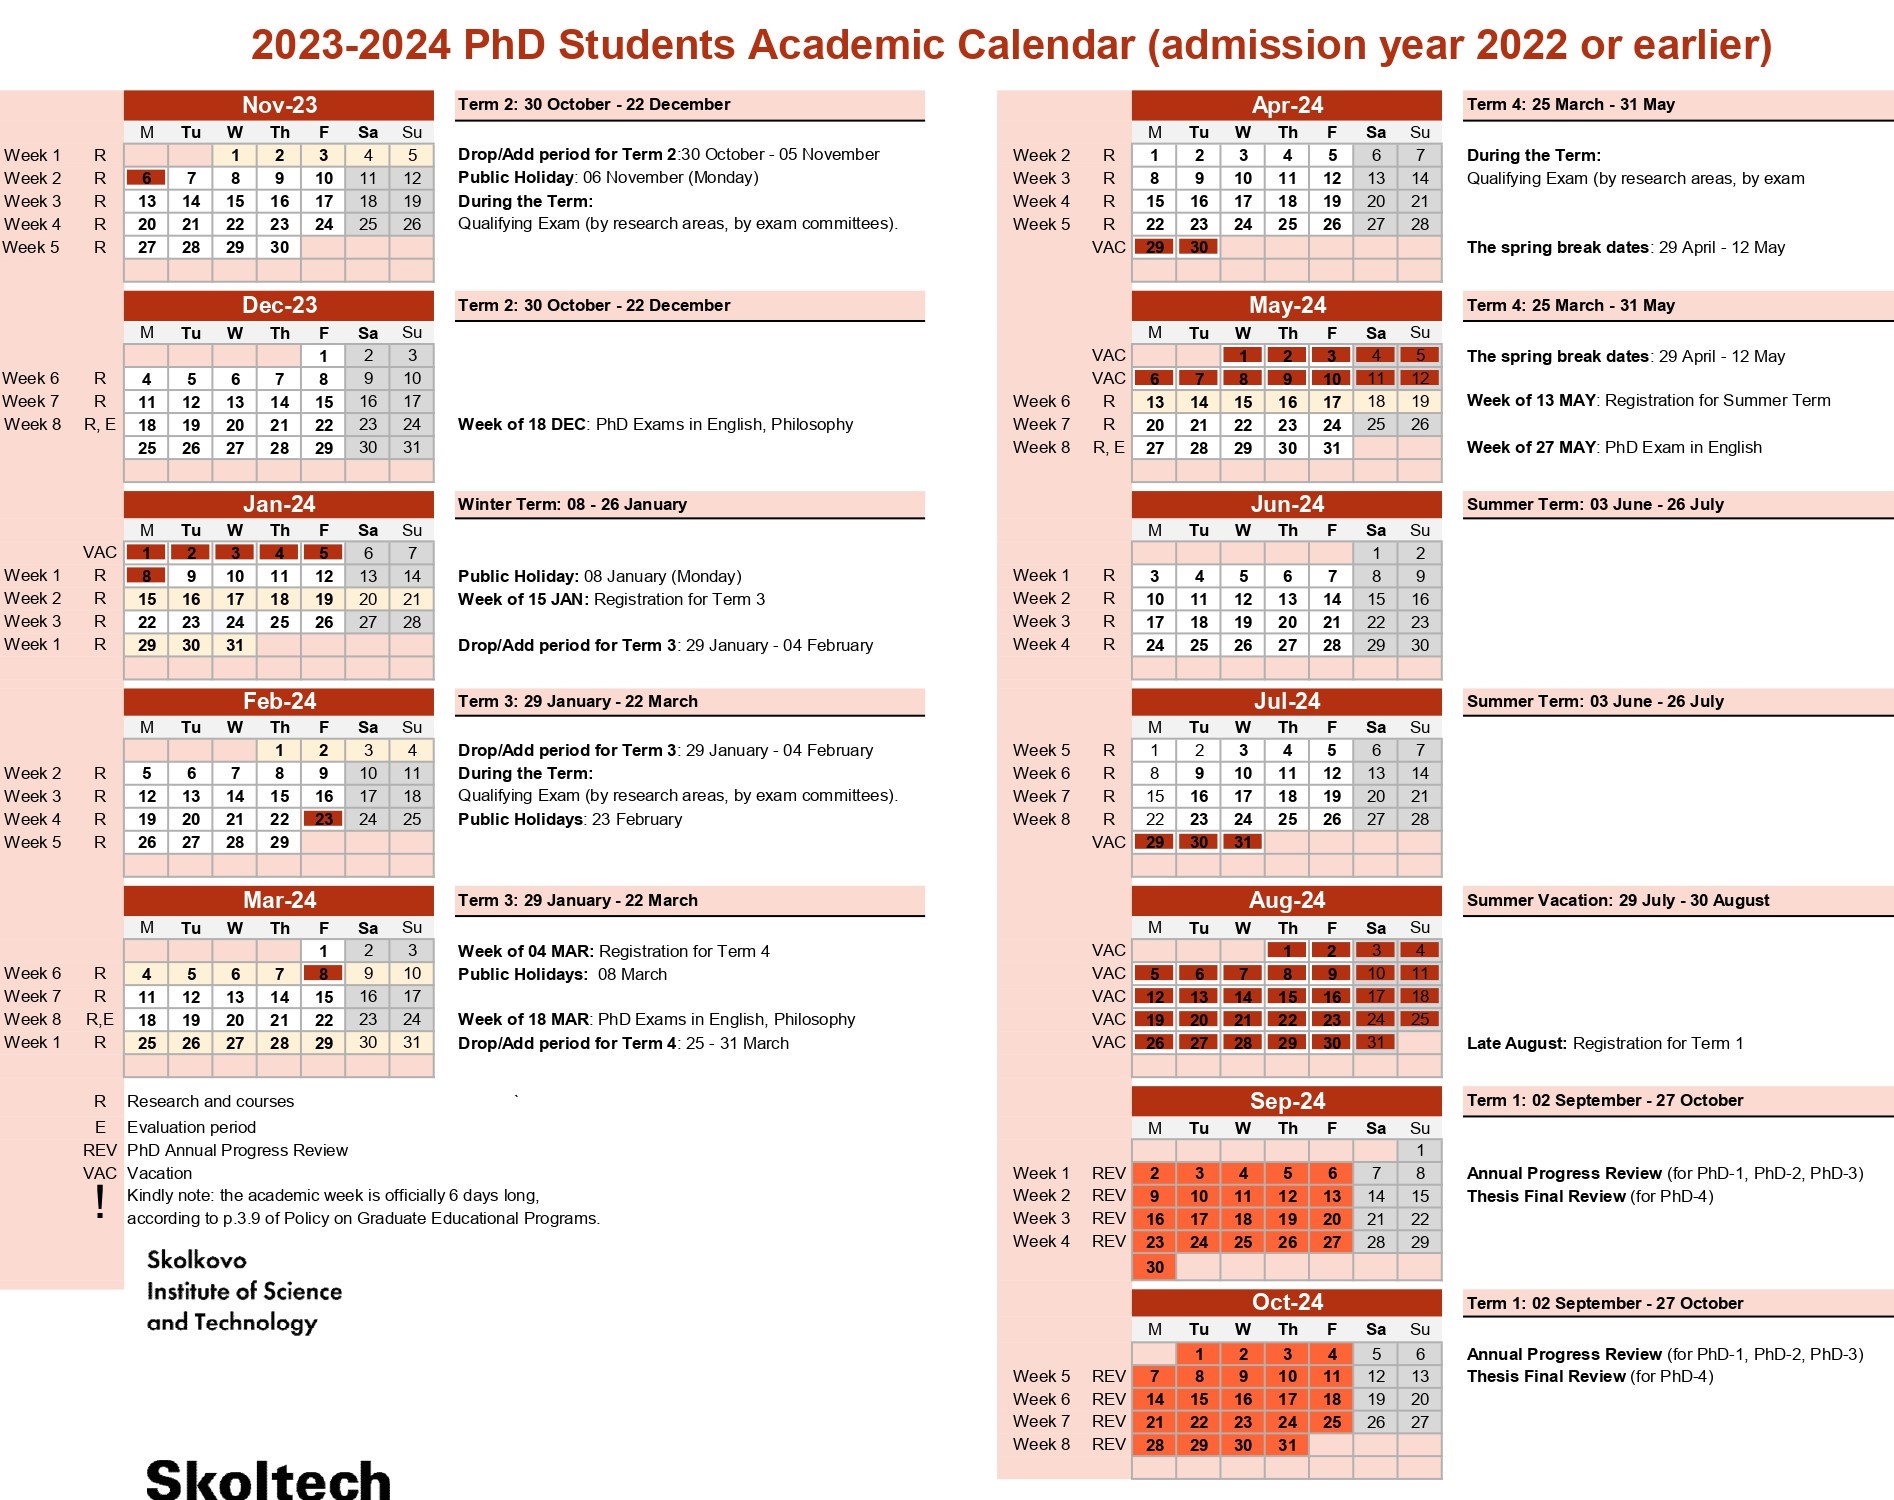 phd-academic-calendar-2023-2024-adm-2022_page-0001